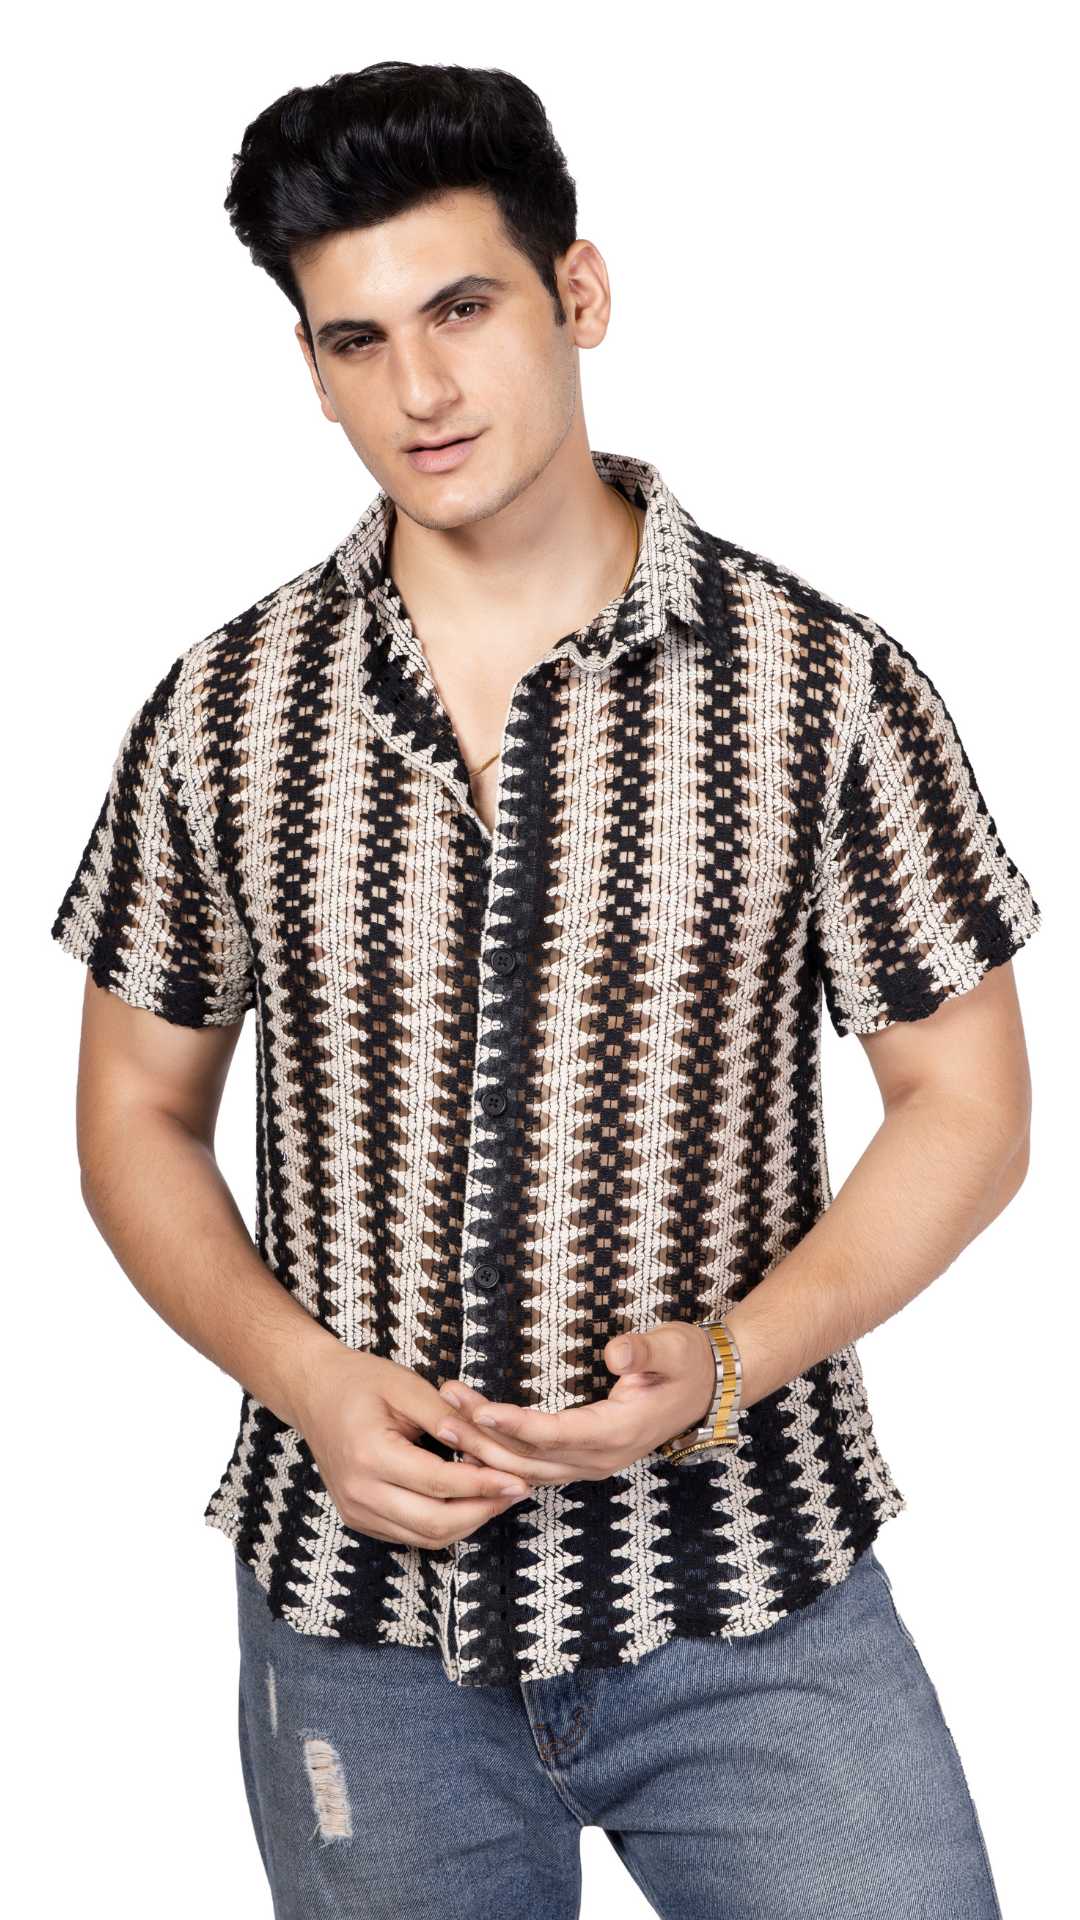 Black And White Crochet Shirt Half Sleeves